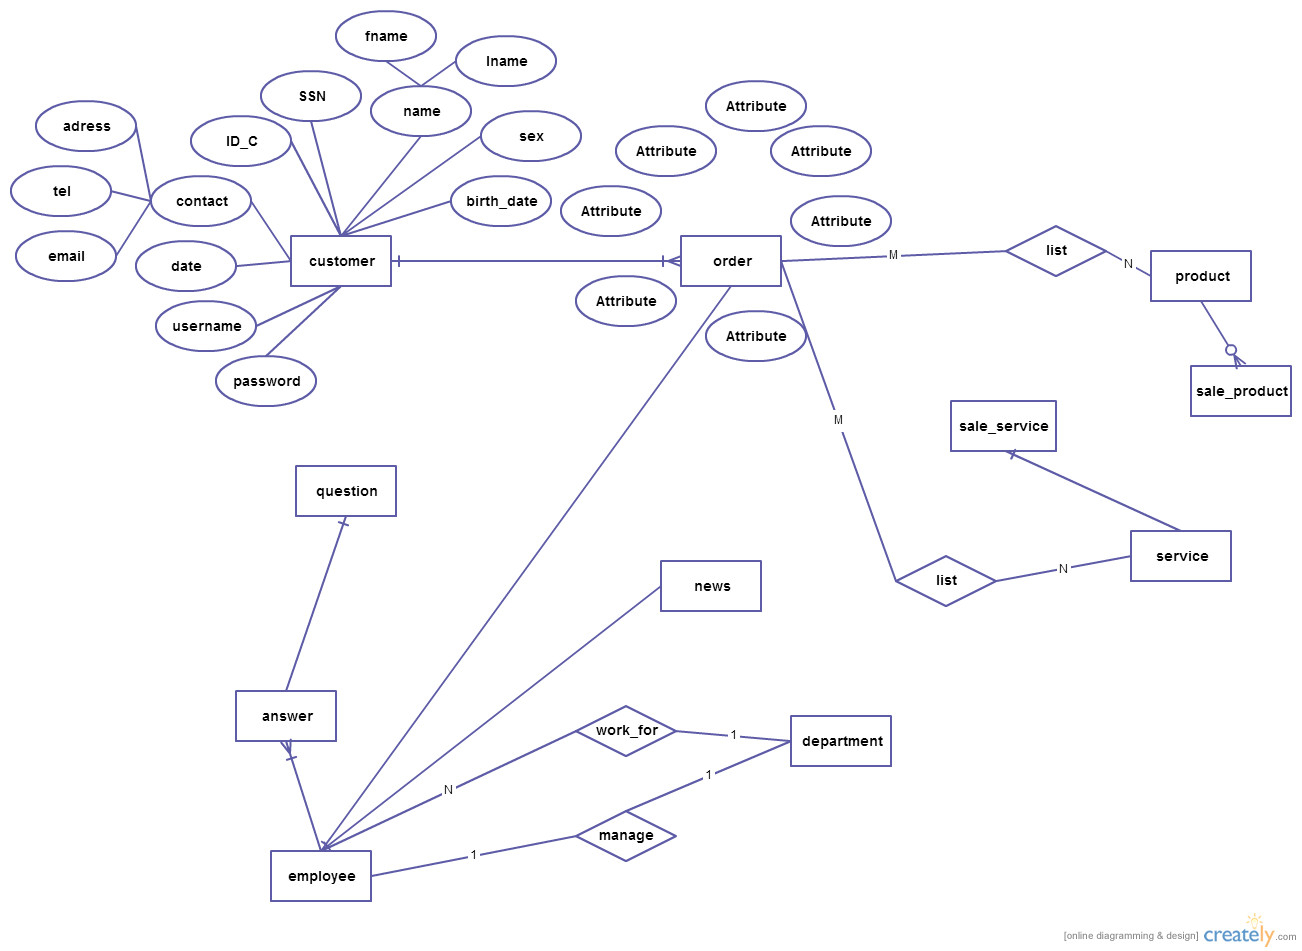 Wr_9277] Shopping Cart Entity Relationship Diagram Creately